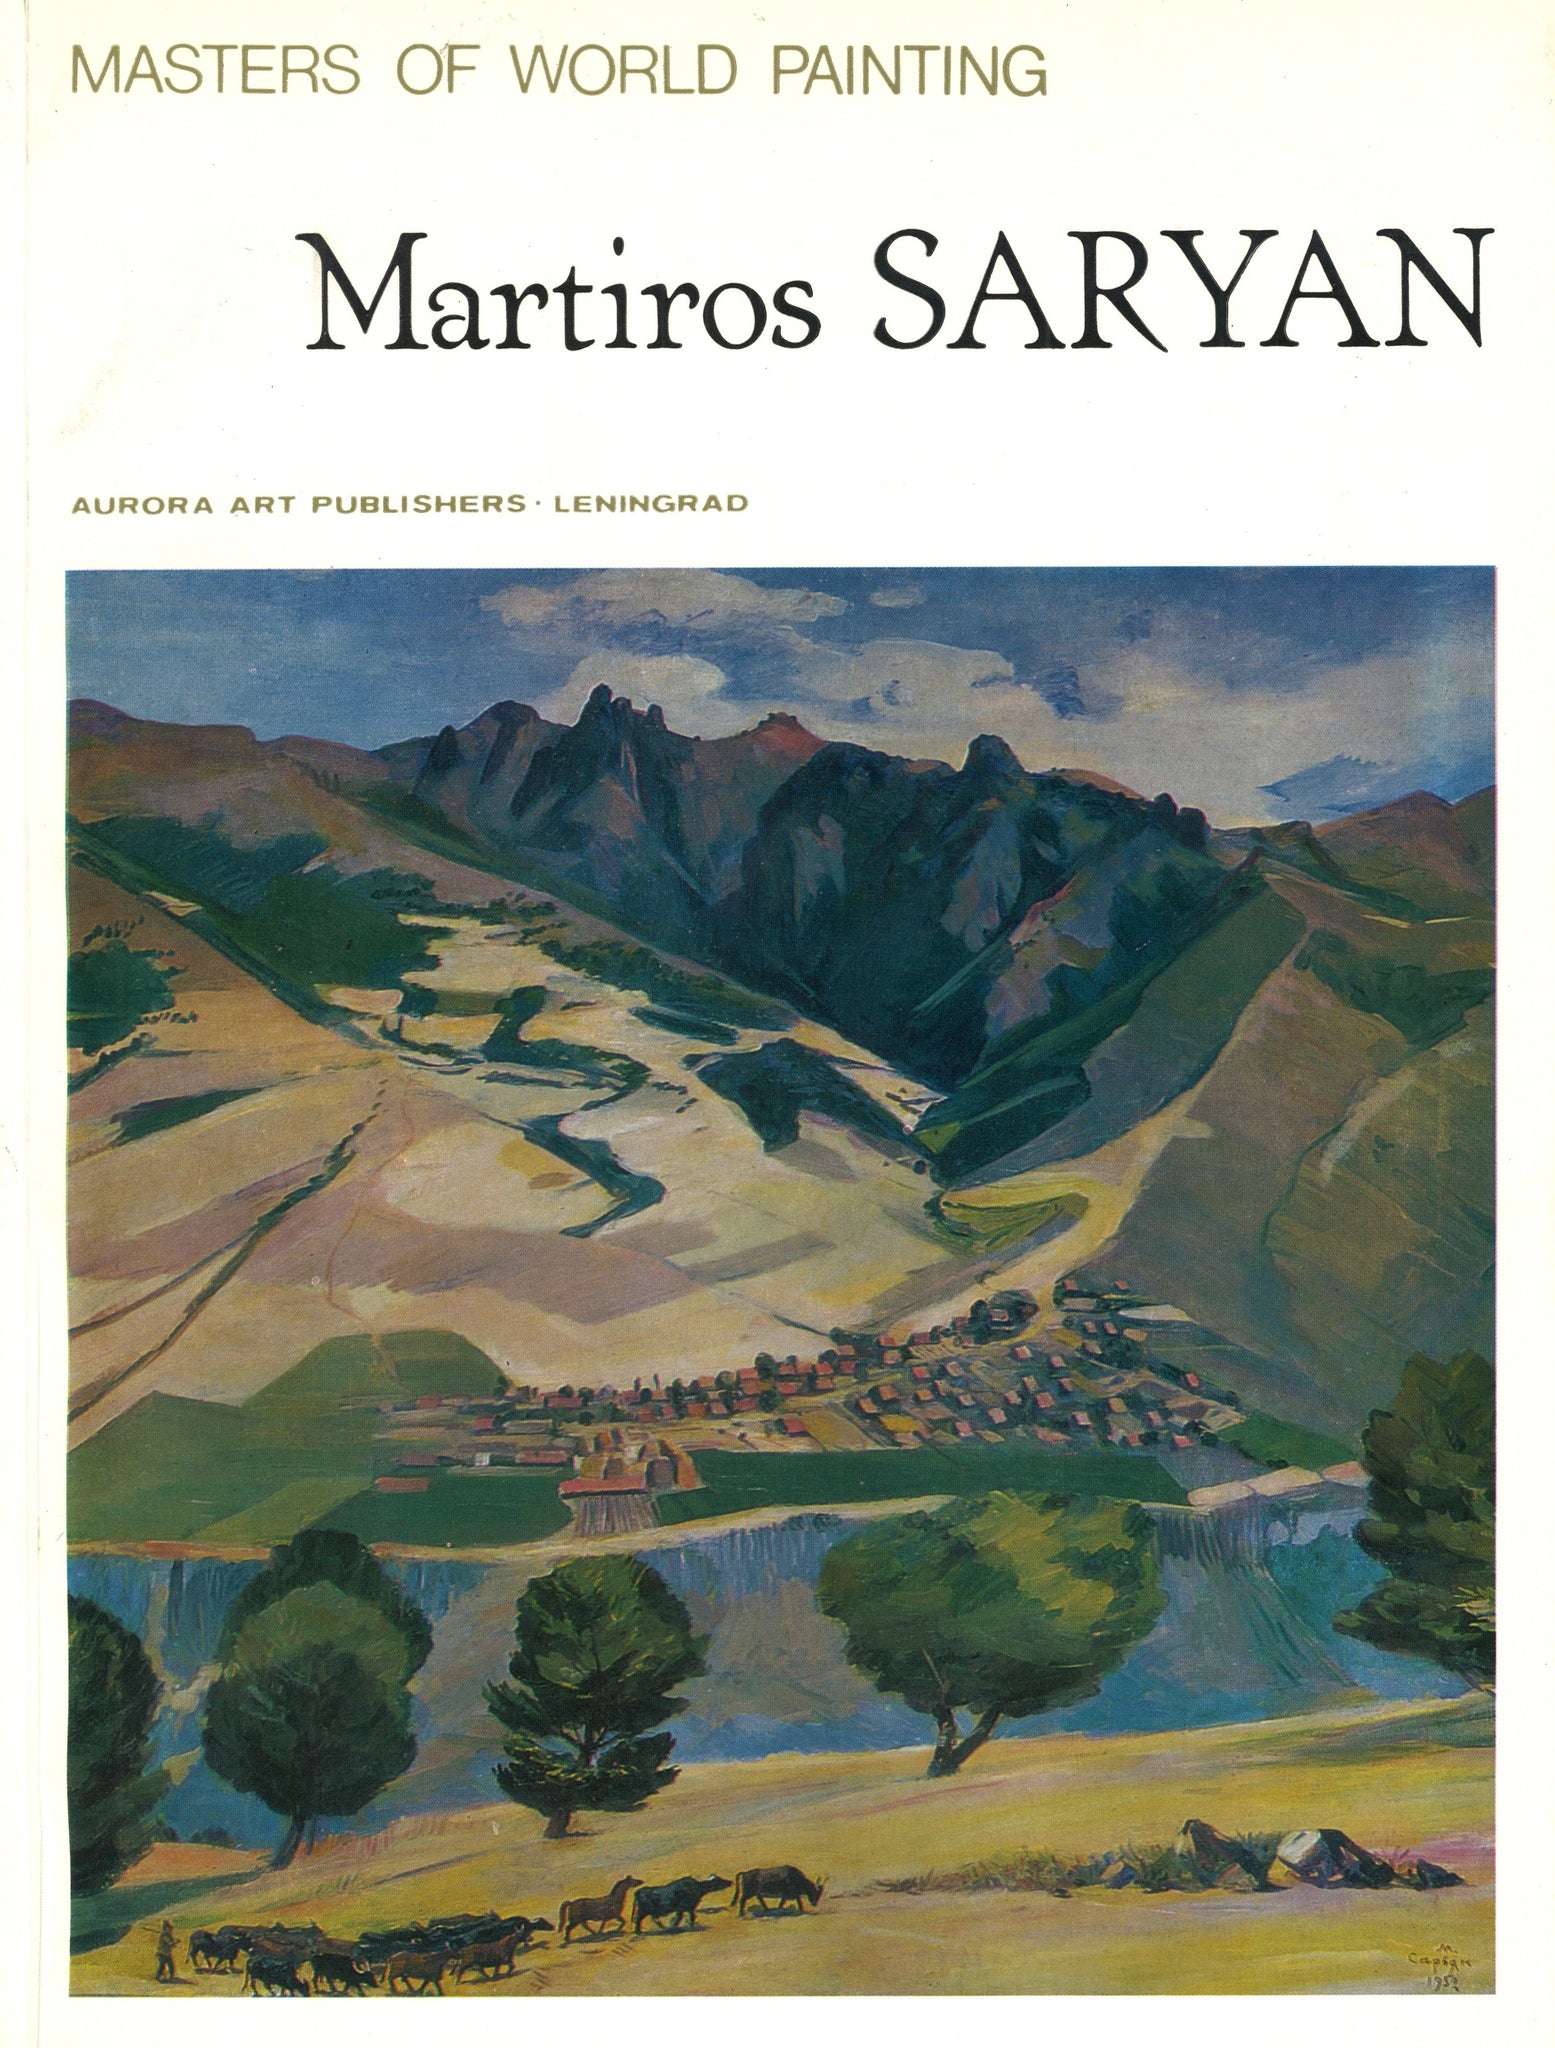 MARTIROS SARYAN: Masters of World Painting